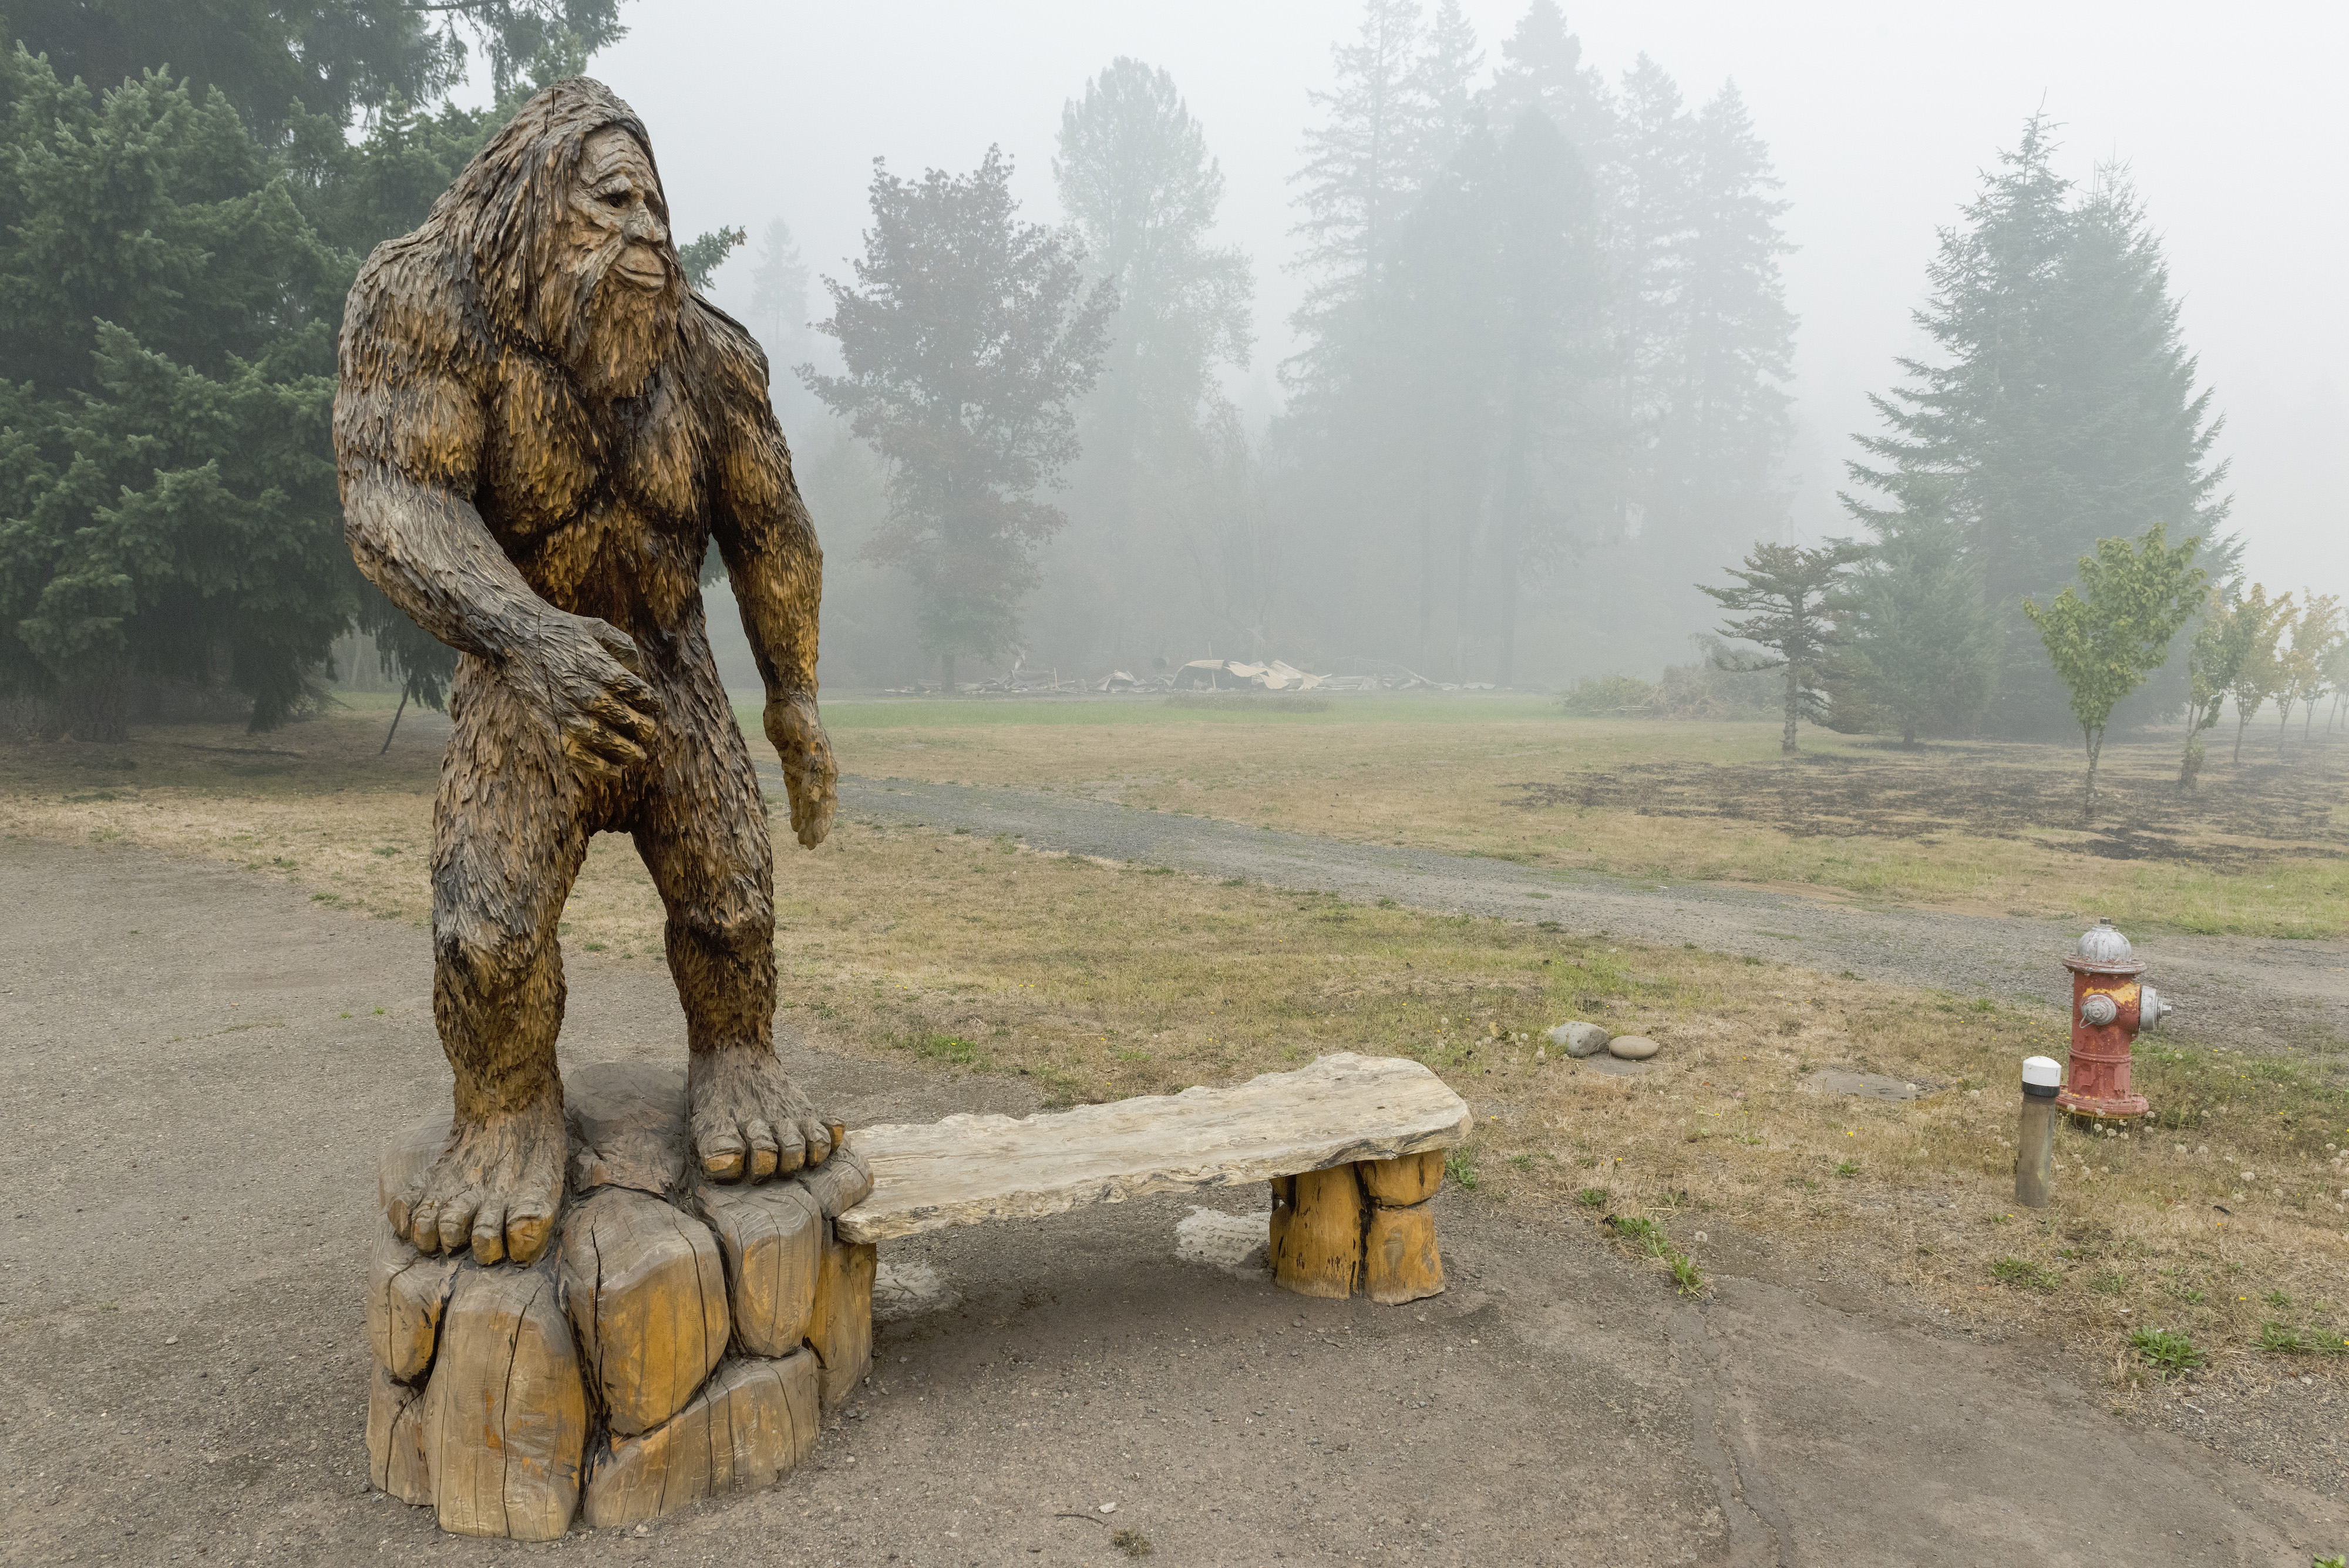 The 10 Most Convincing Bigfoot Sightings